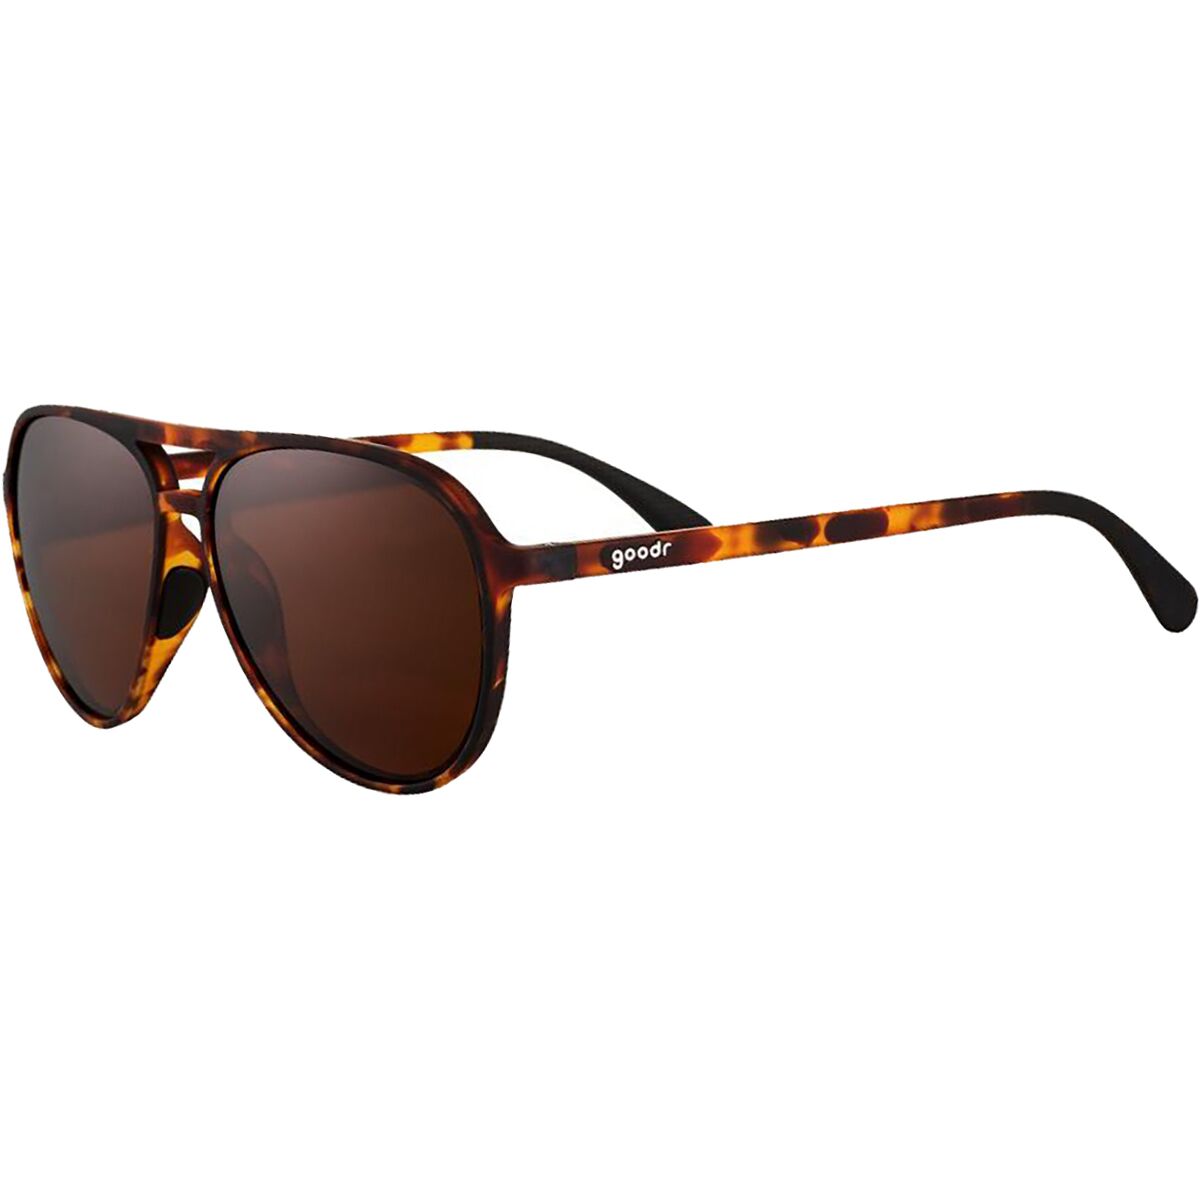 Goodr Mach Gs Polarized Sunglasses